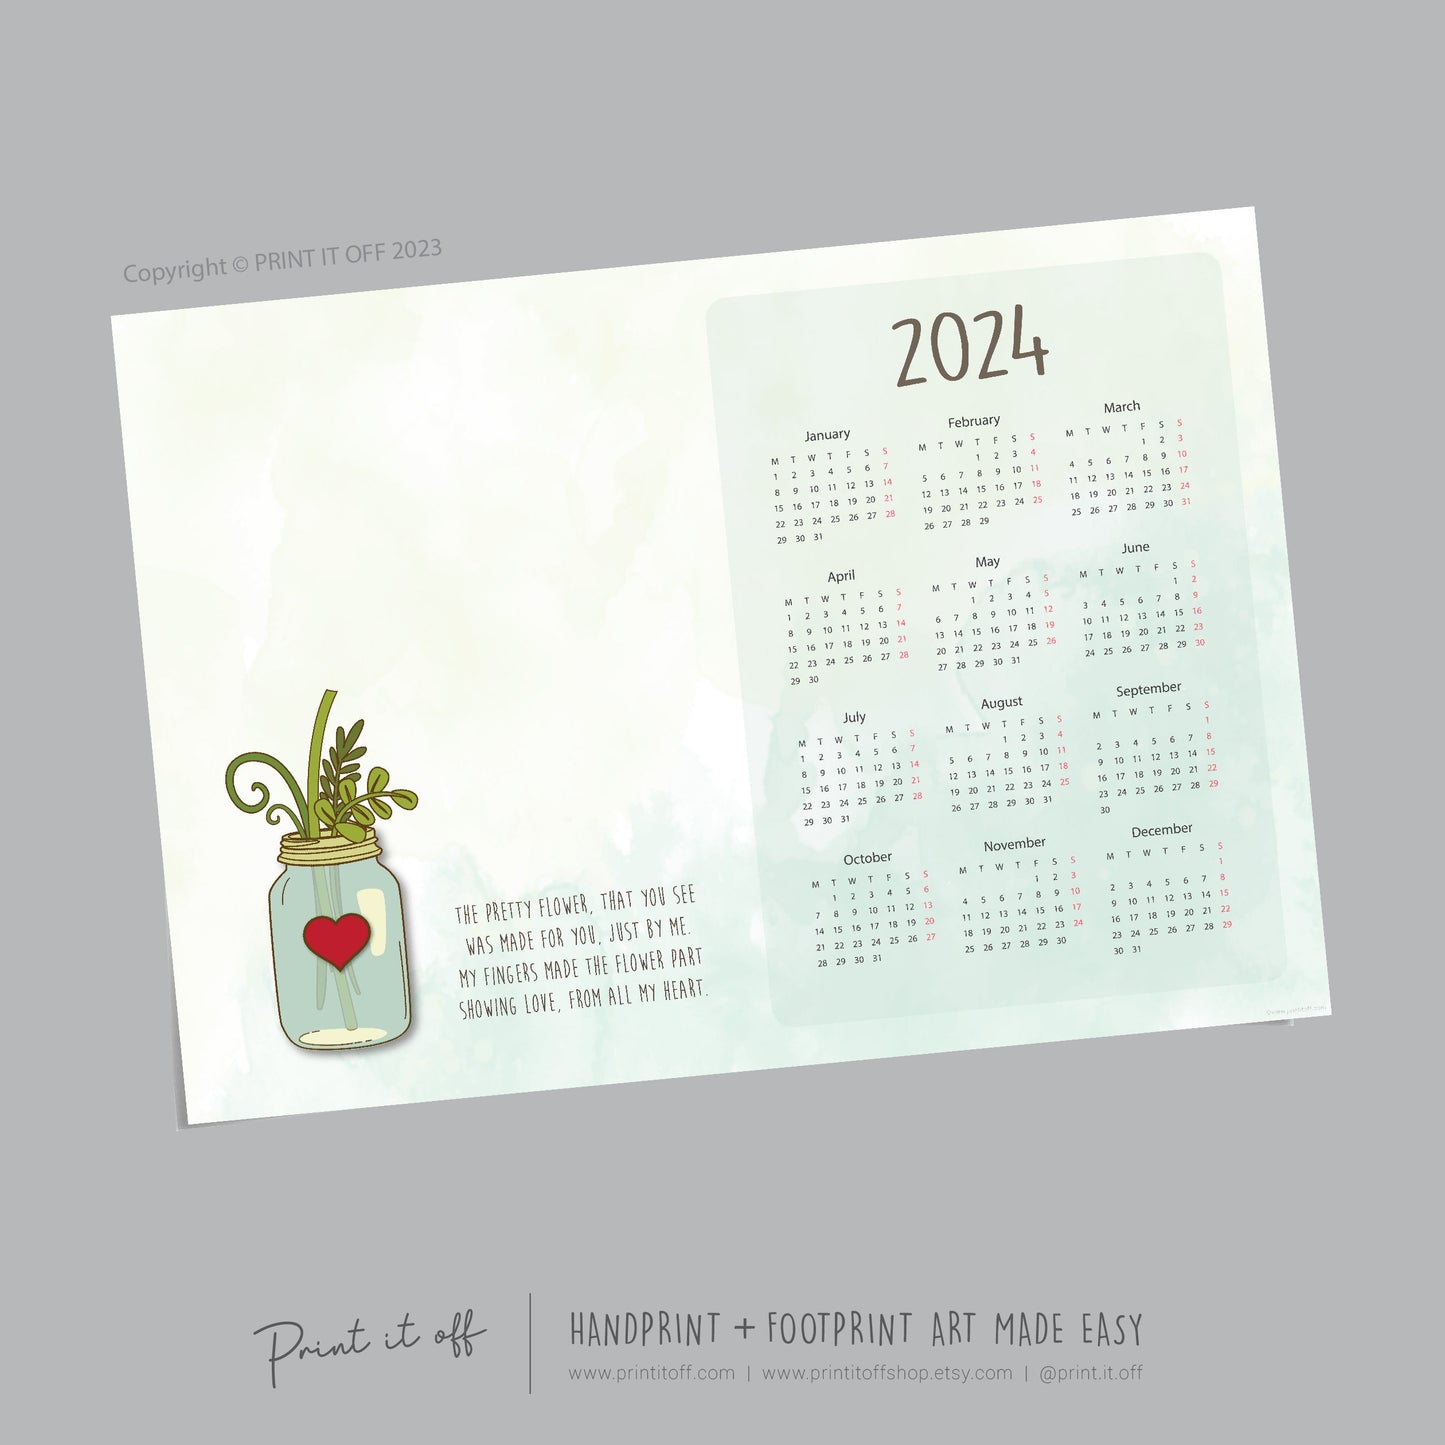 2024 Flower Jar Calendar Year / Handprint Footprint Art Craft / Activity DIY Gift Keepsake / Baby Kids Child Toddler / Print It Off